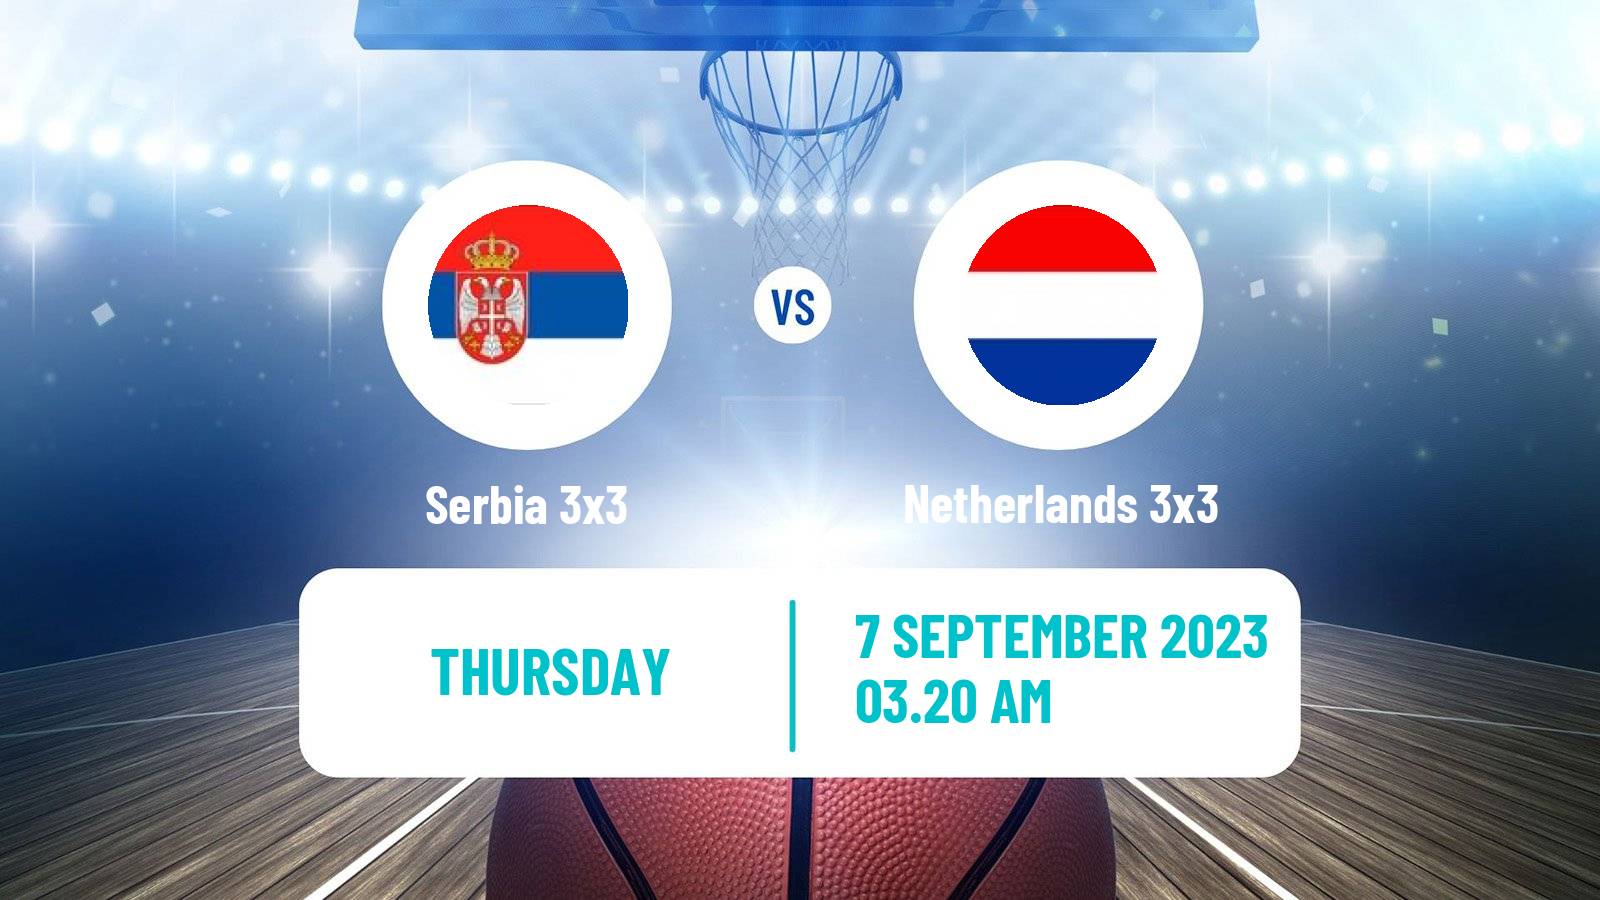 Basketball Europe Cup Basketball 3x3 Serbia 3x3 - Netherlands 3x3